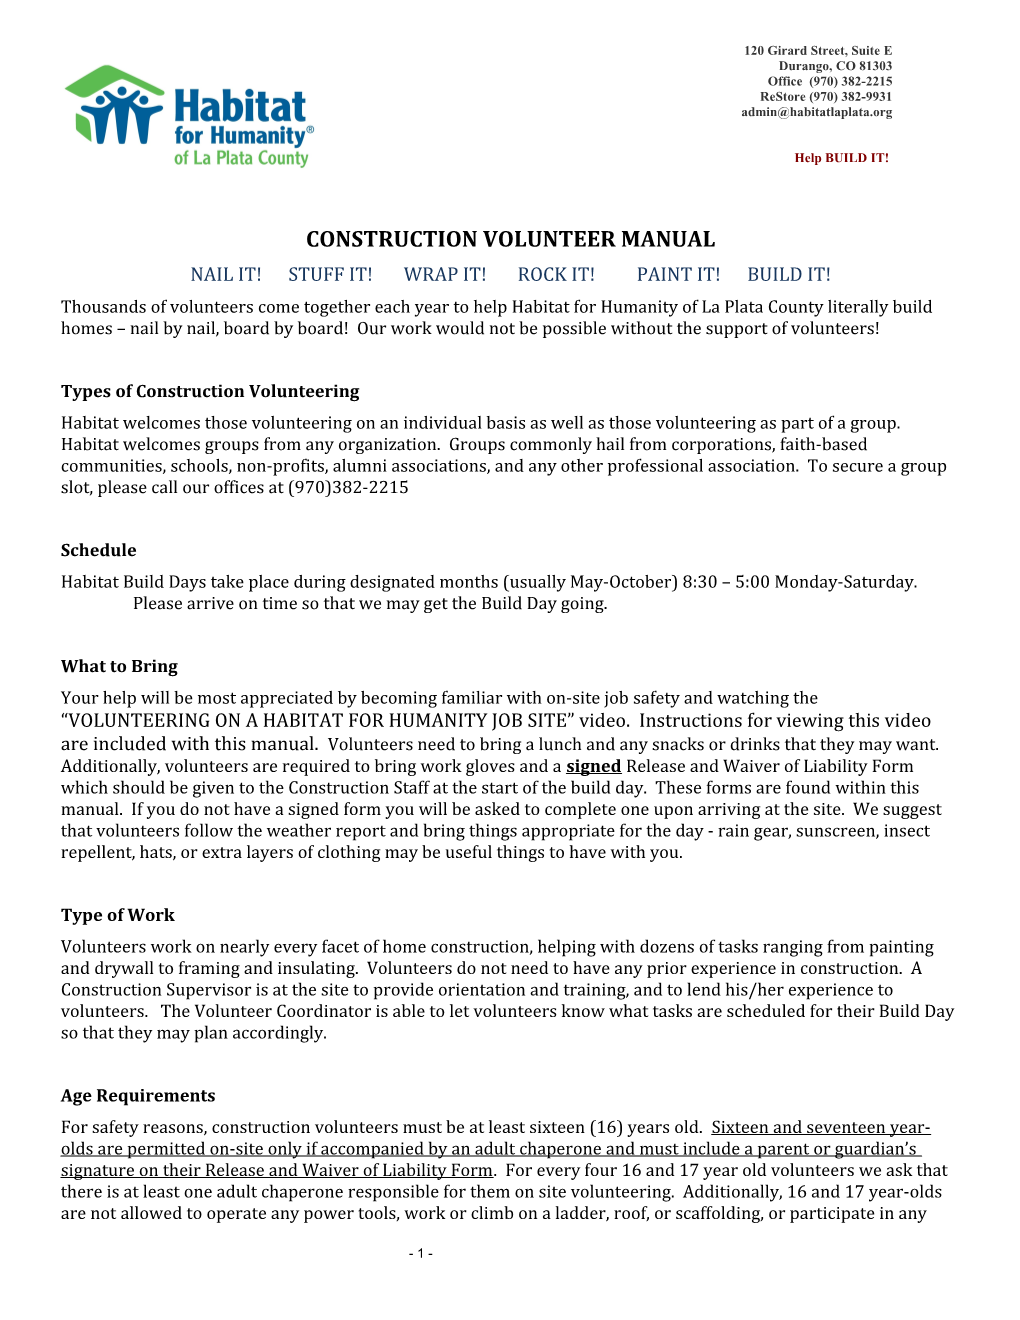 Construction Volunteering Guidelines